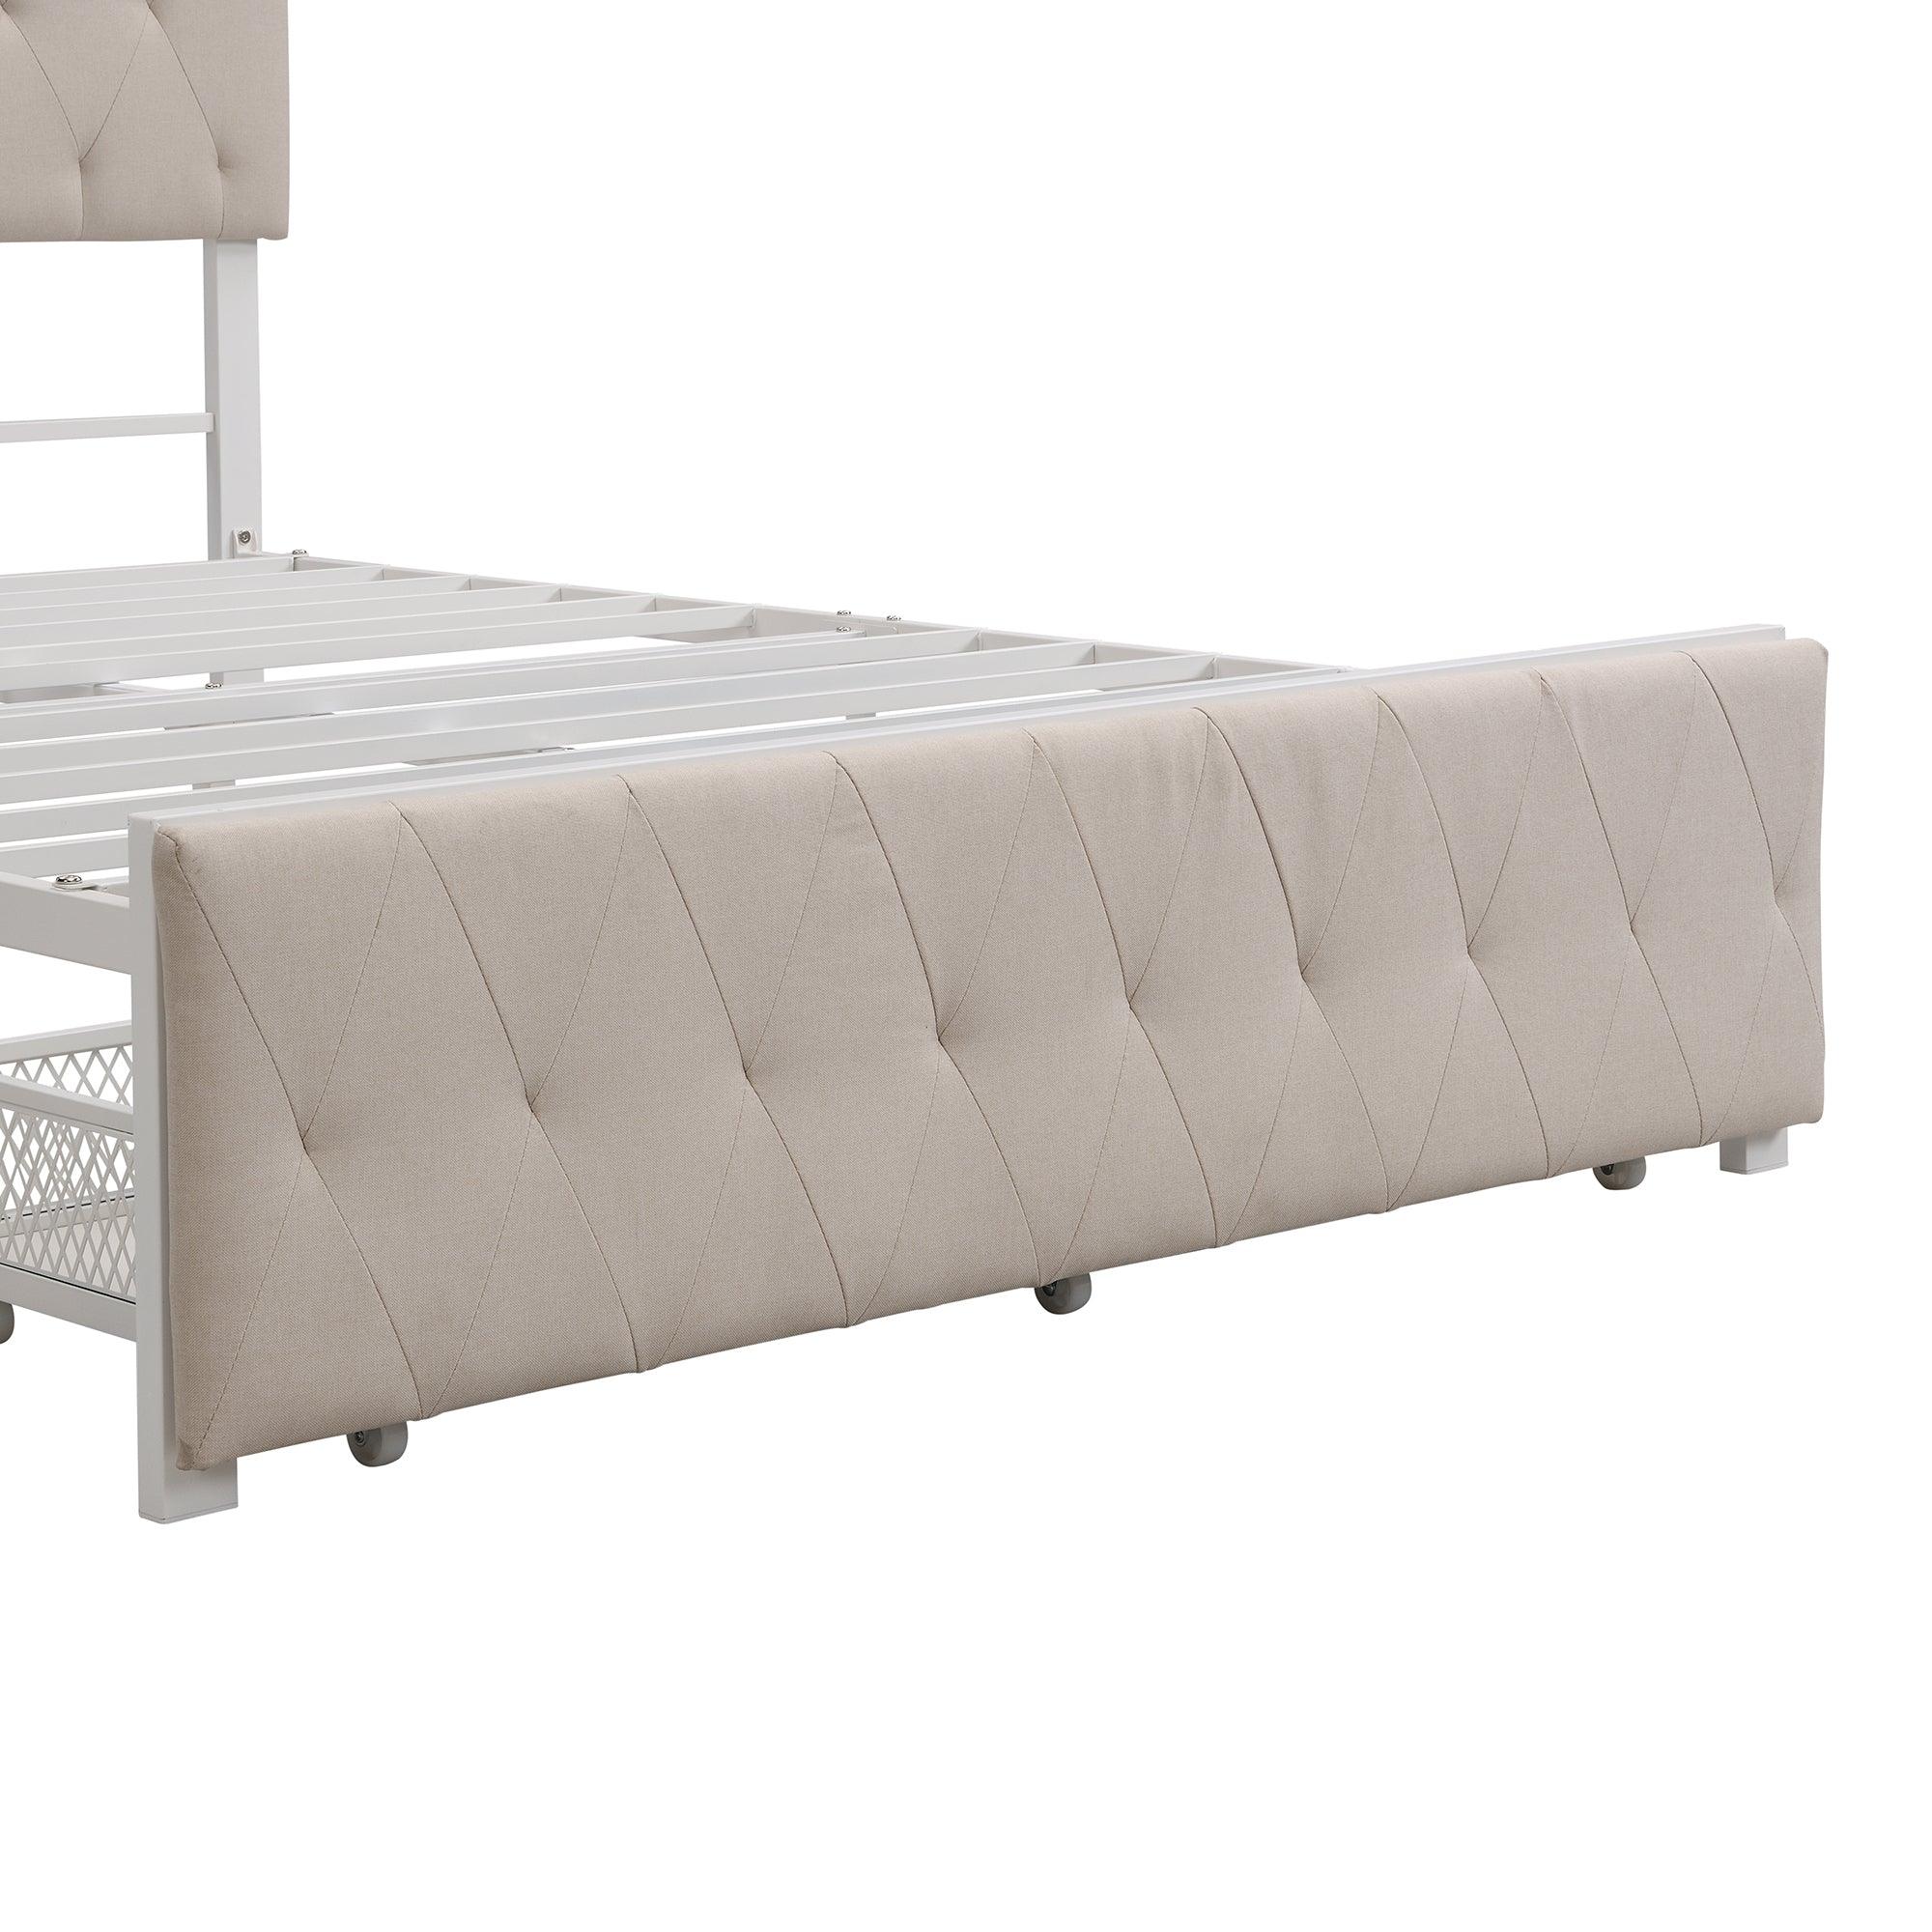 Full Size Storage Bed Metal Platform Bed With A Big Drawer - Beige